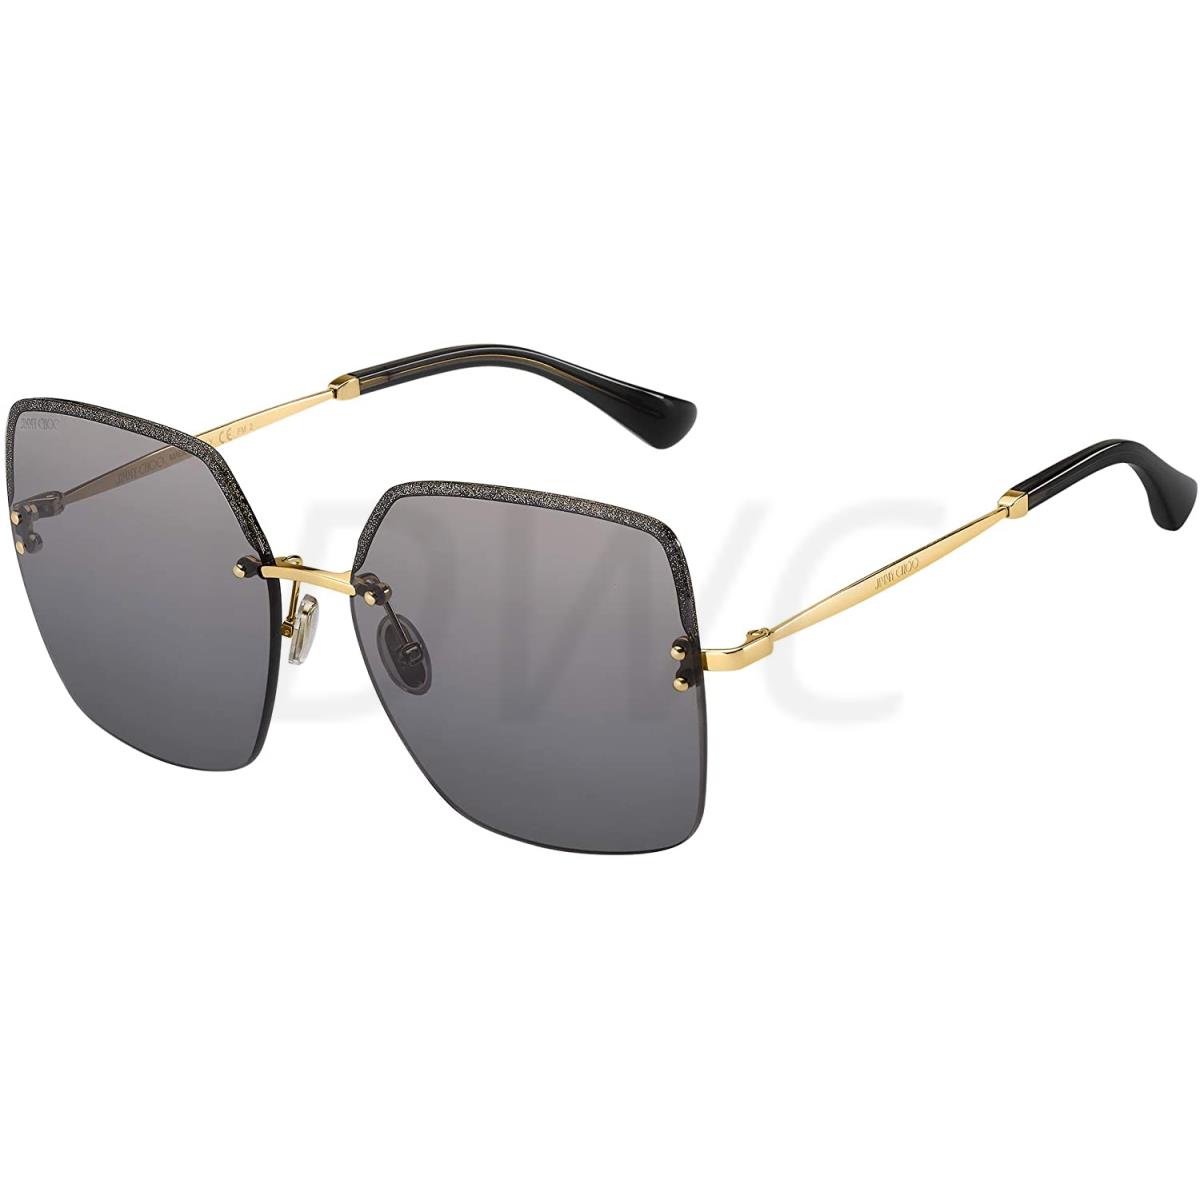 Jimmy Choo Tavi/s 02F7 Gold Grey Sunglasses - Gold Frame, Gray Lens